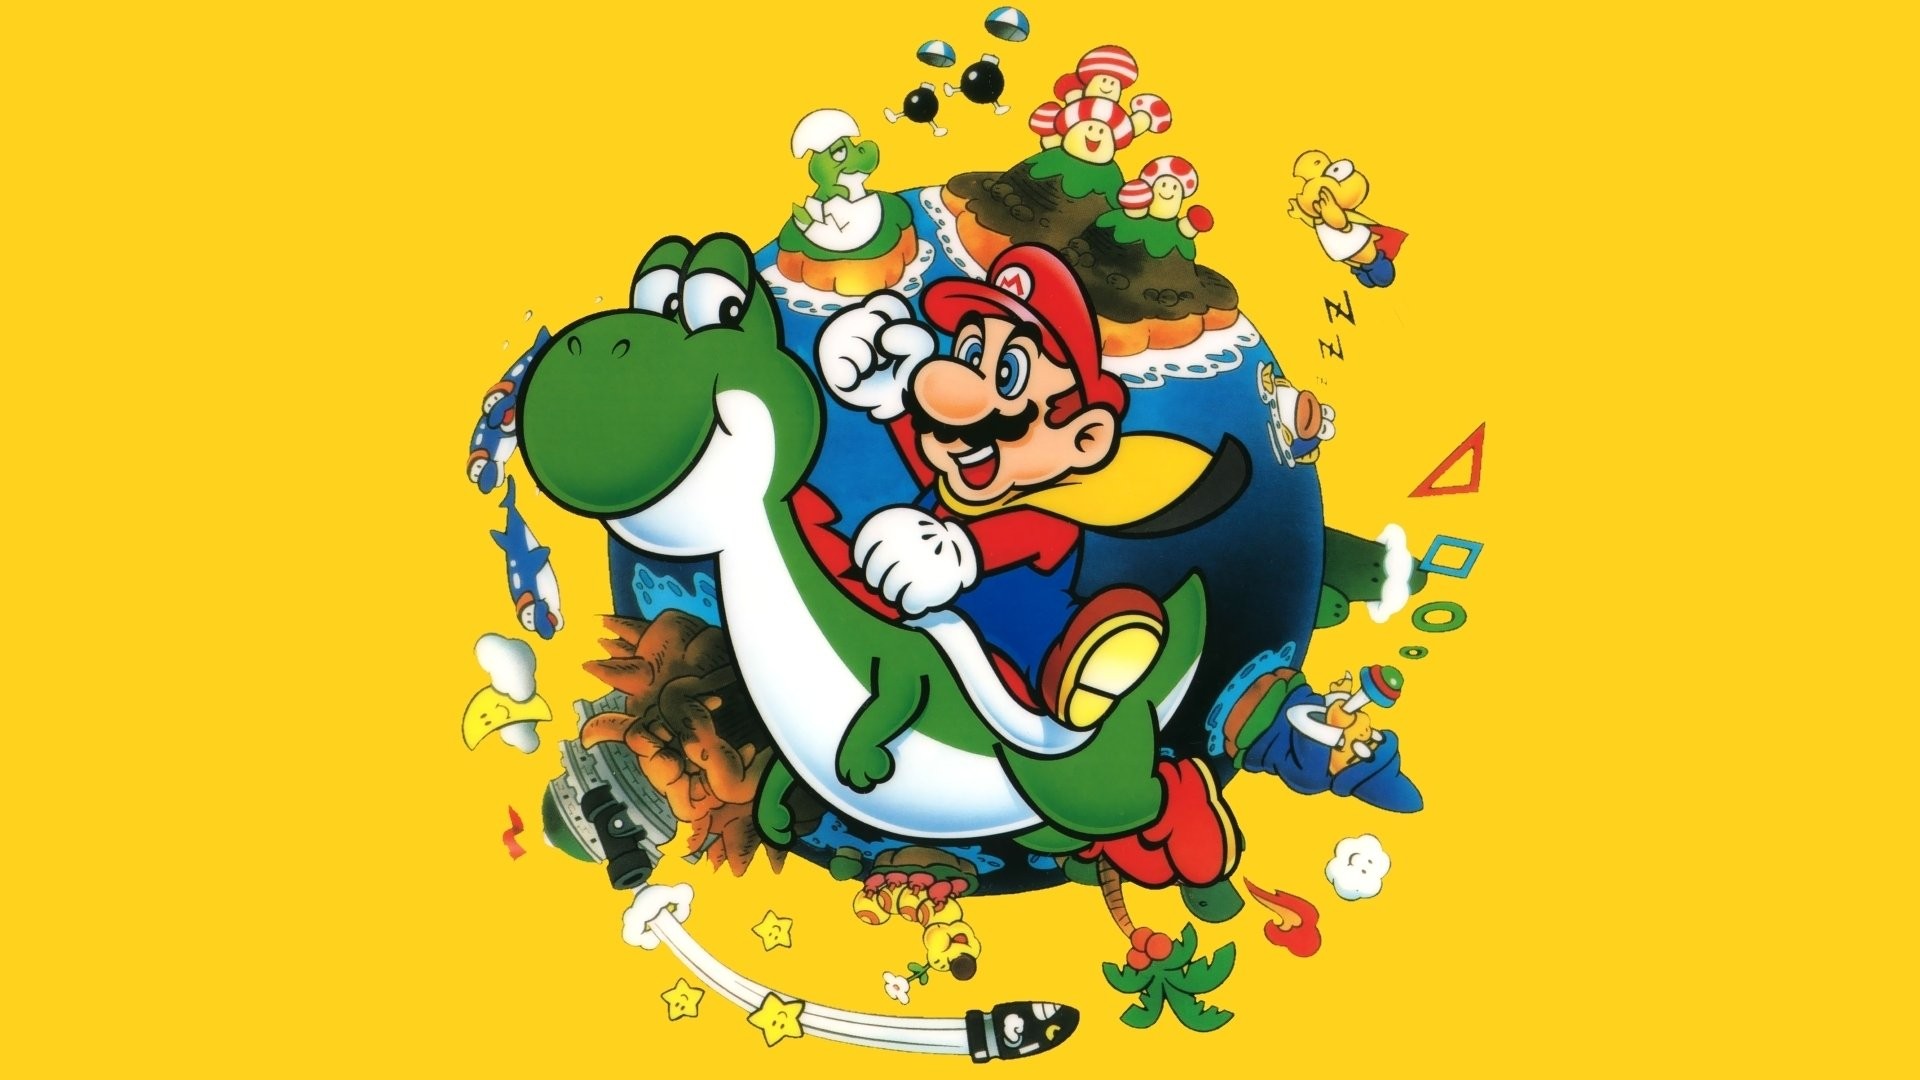 Free Download Super Mario World Game